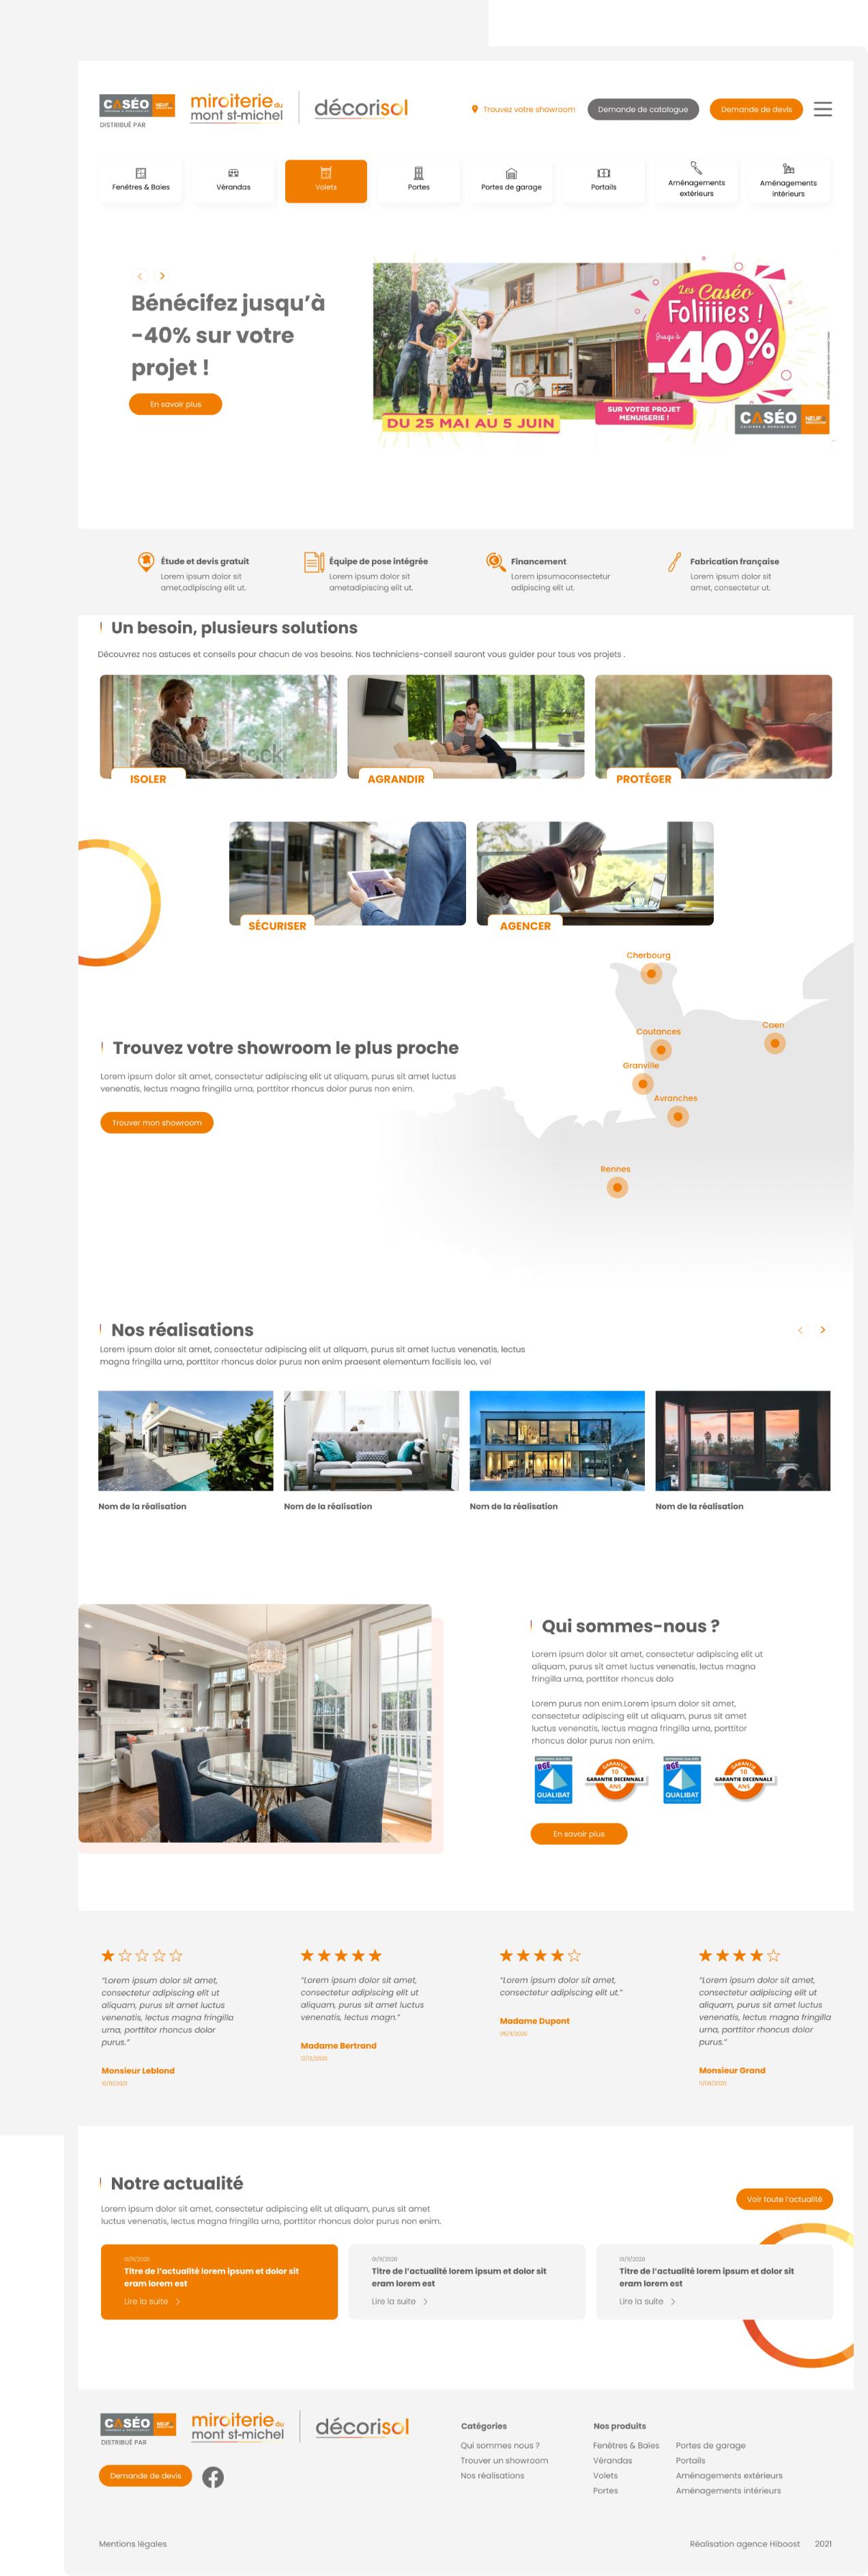 Webdesign Homepage Miroiterie